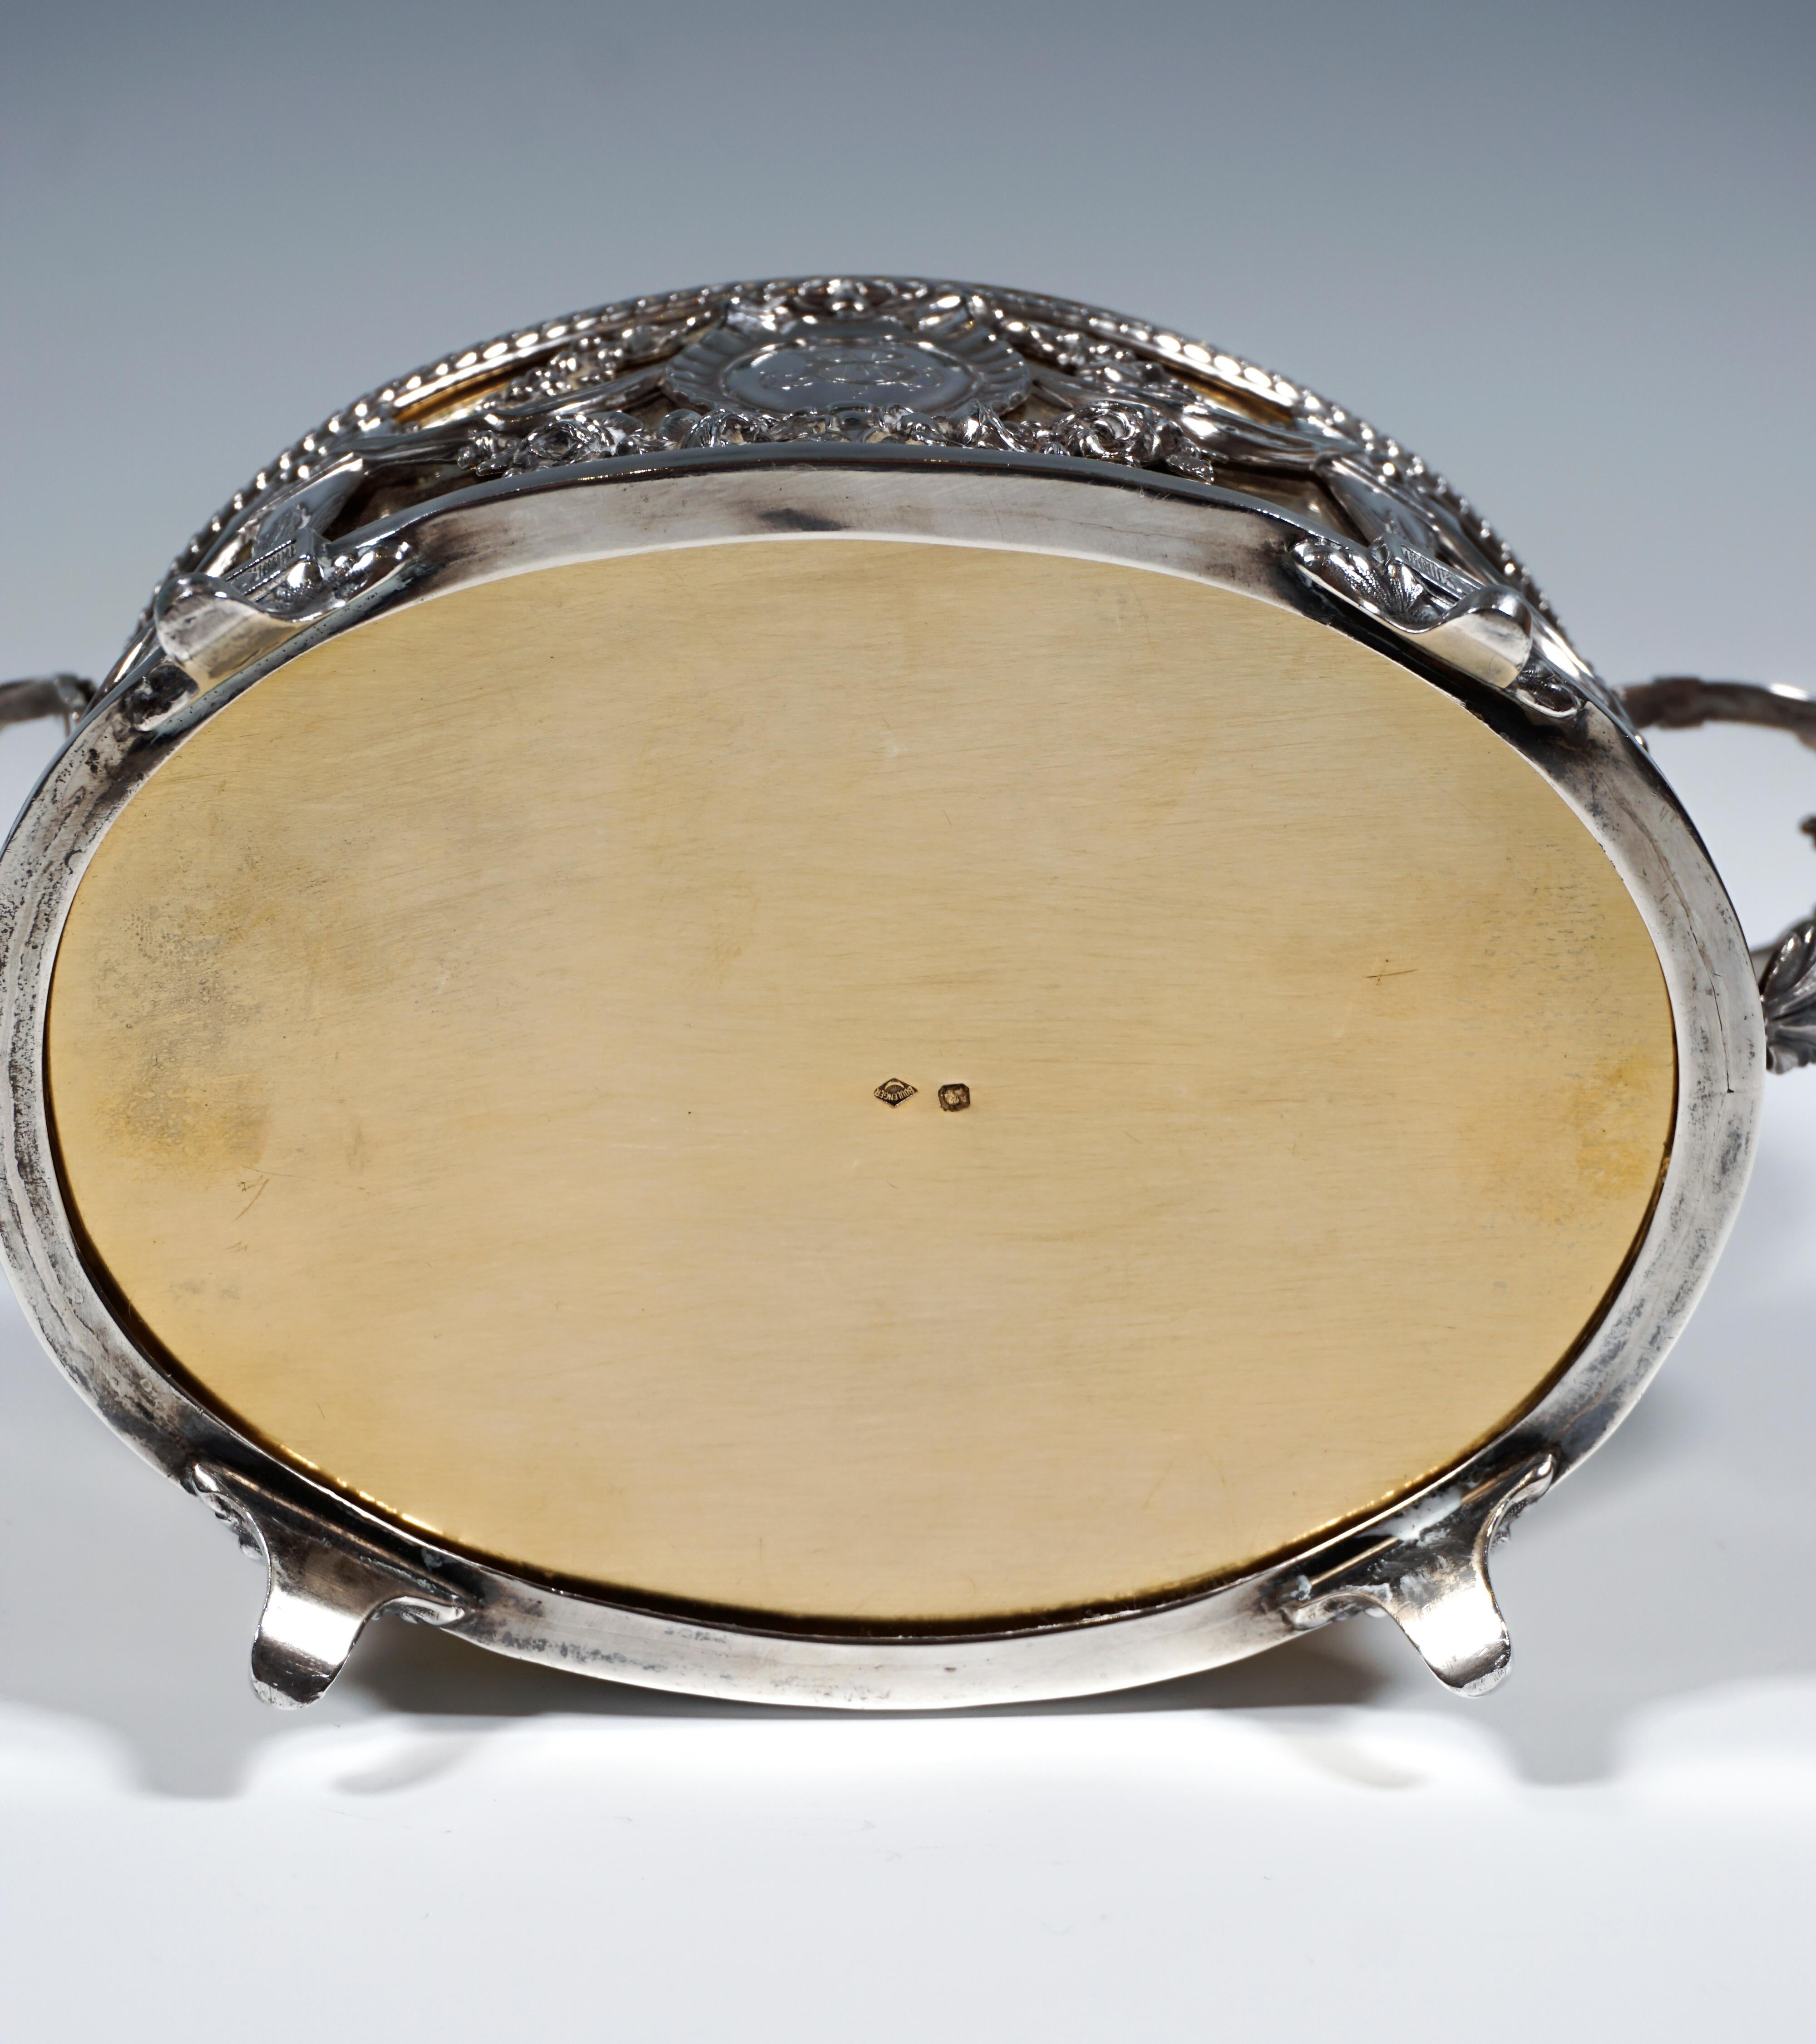 Magnificent Silver Sugar Bowl with Gilding, Adolphe Boulenger Paris, around 1890 1